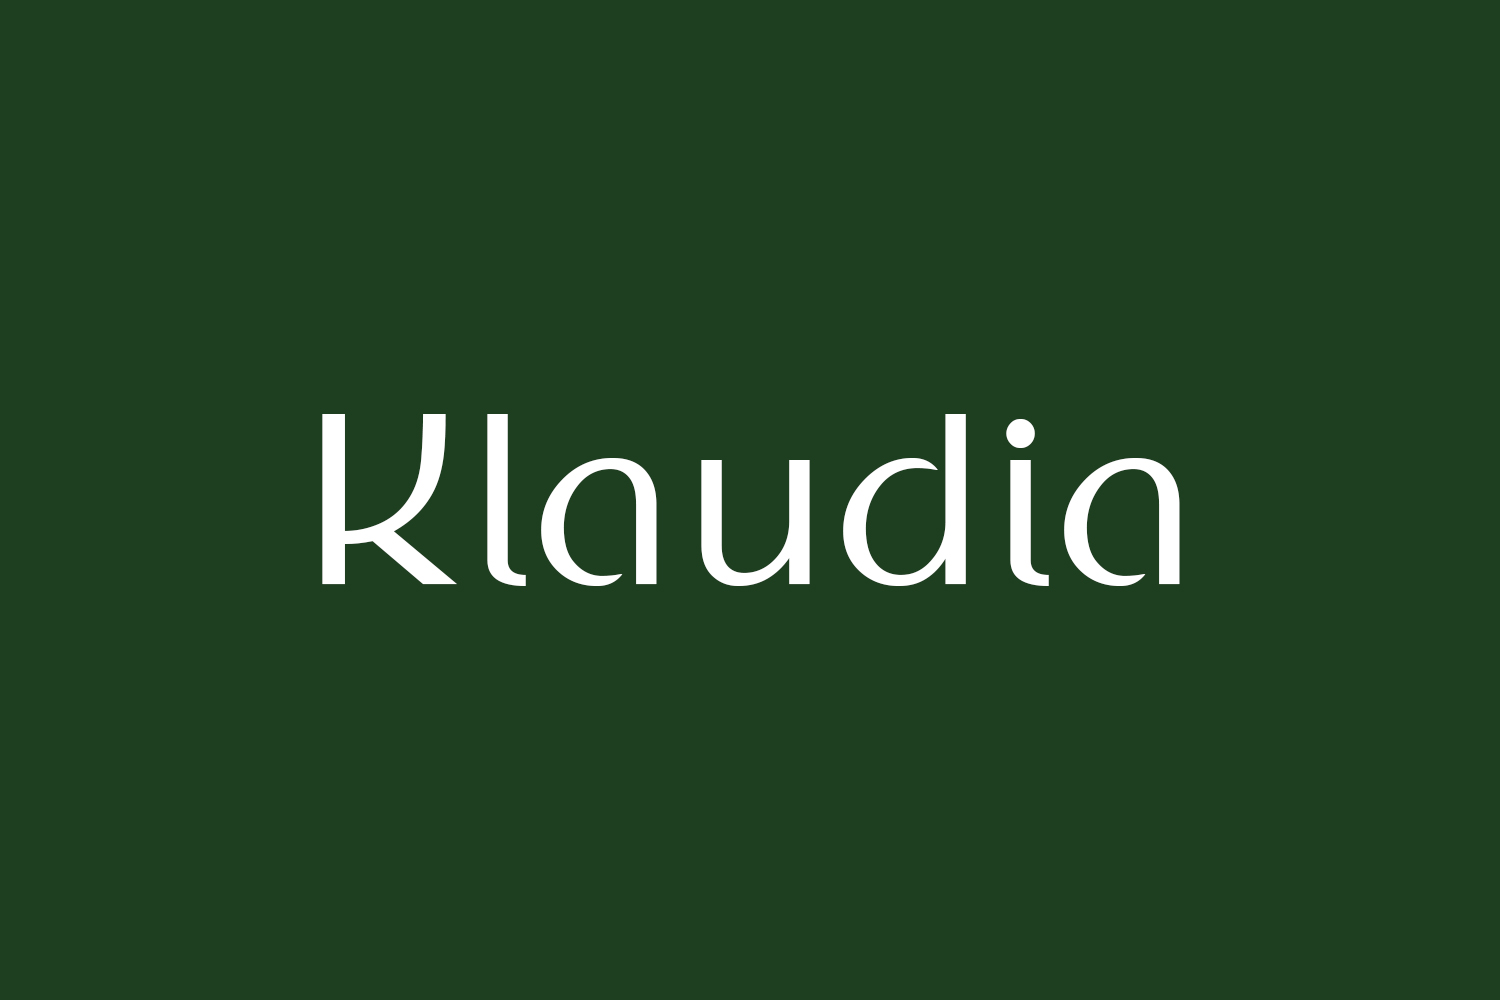 Klaudia Free Font